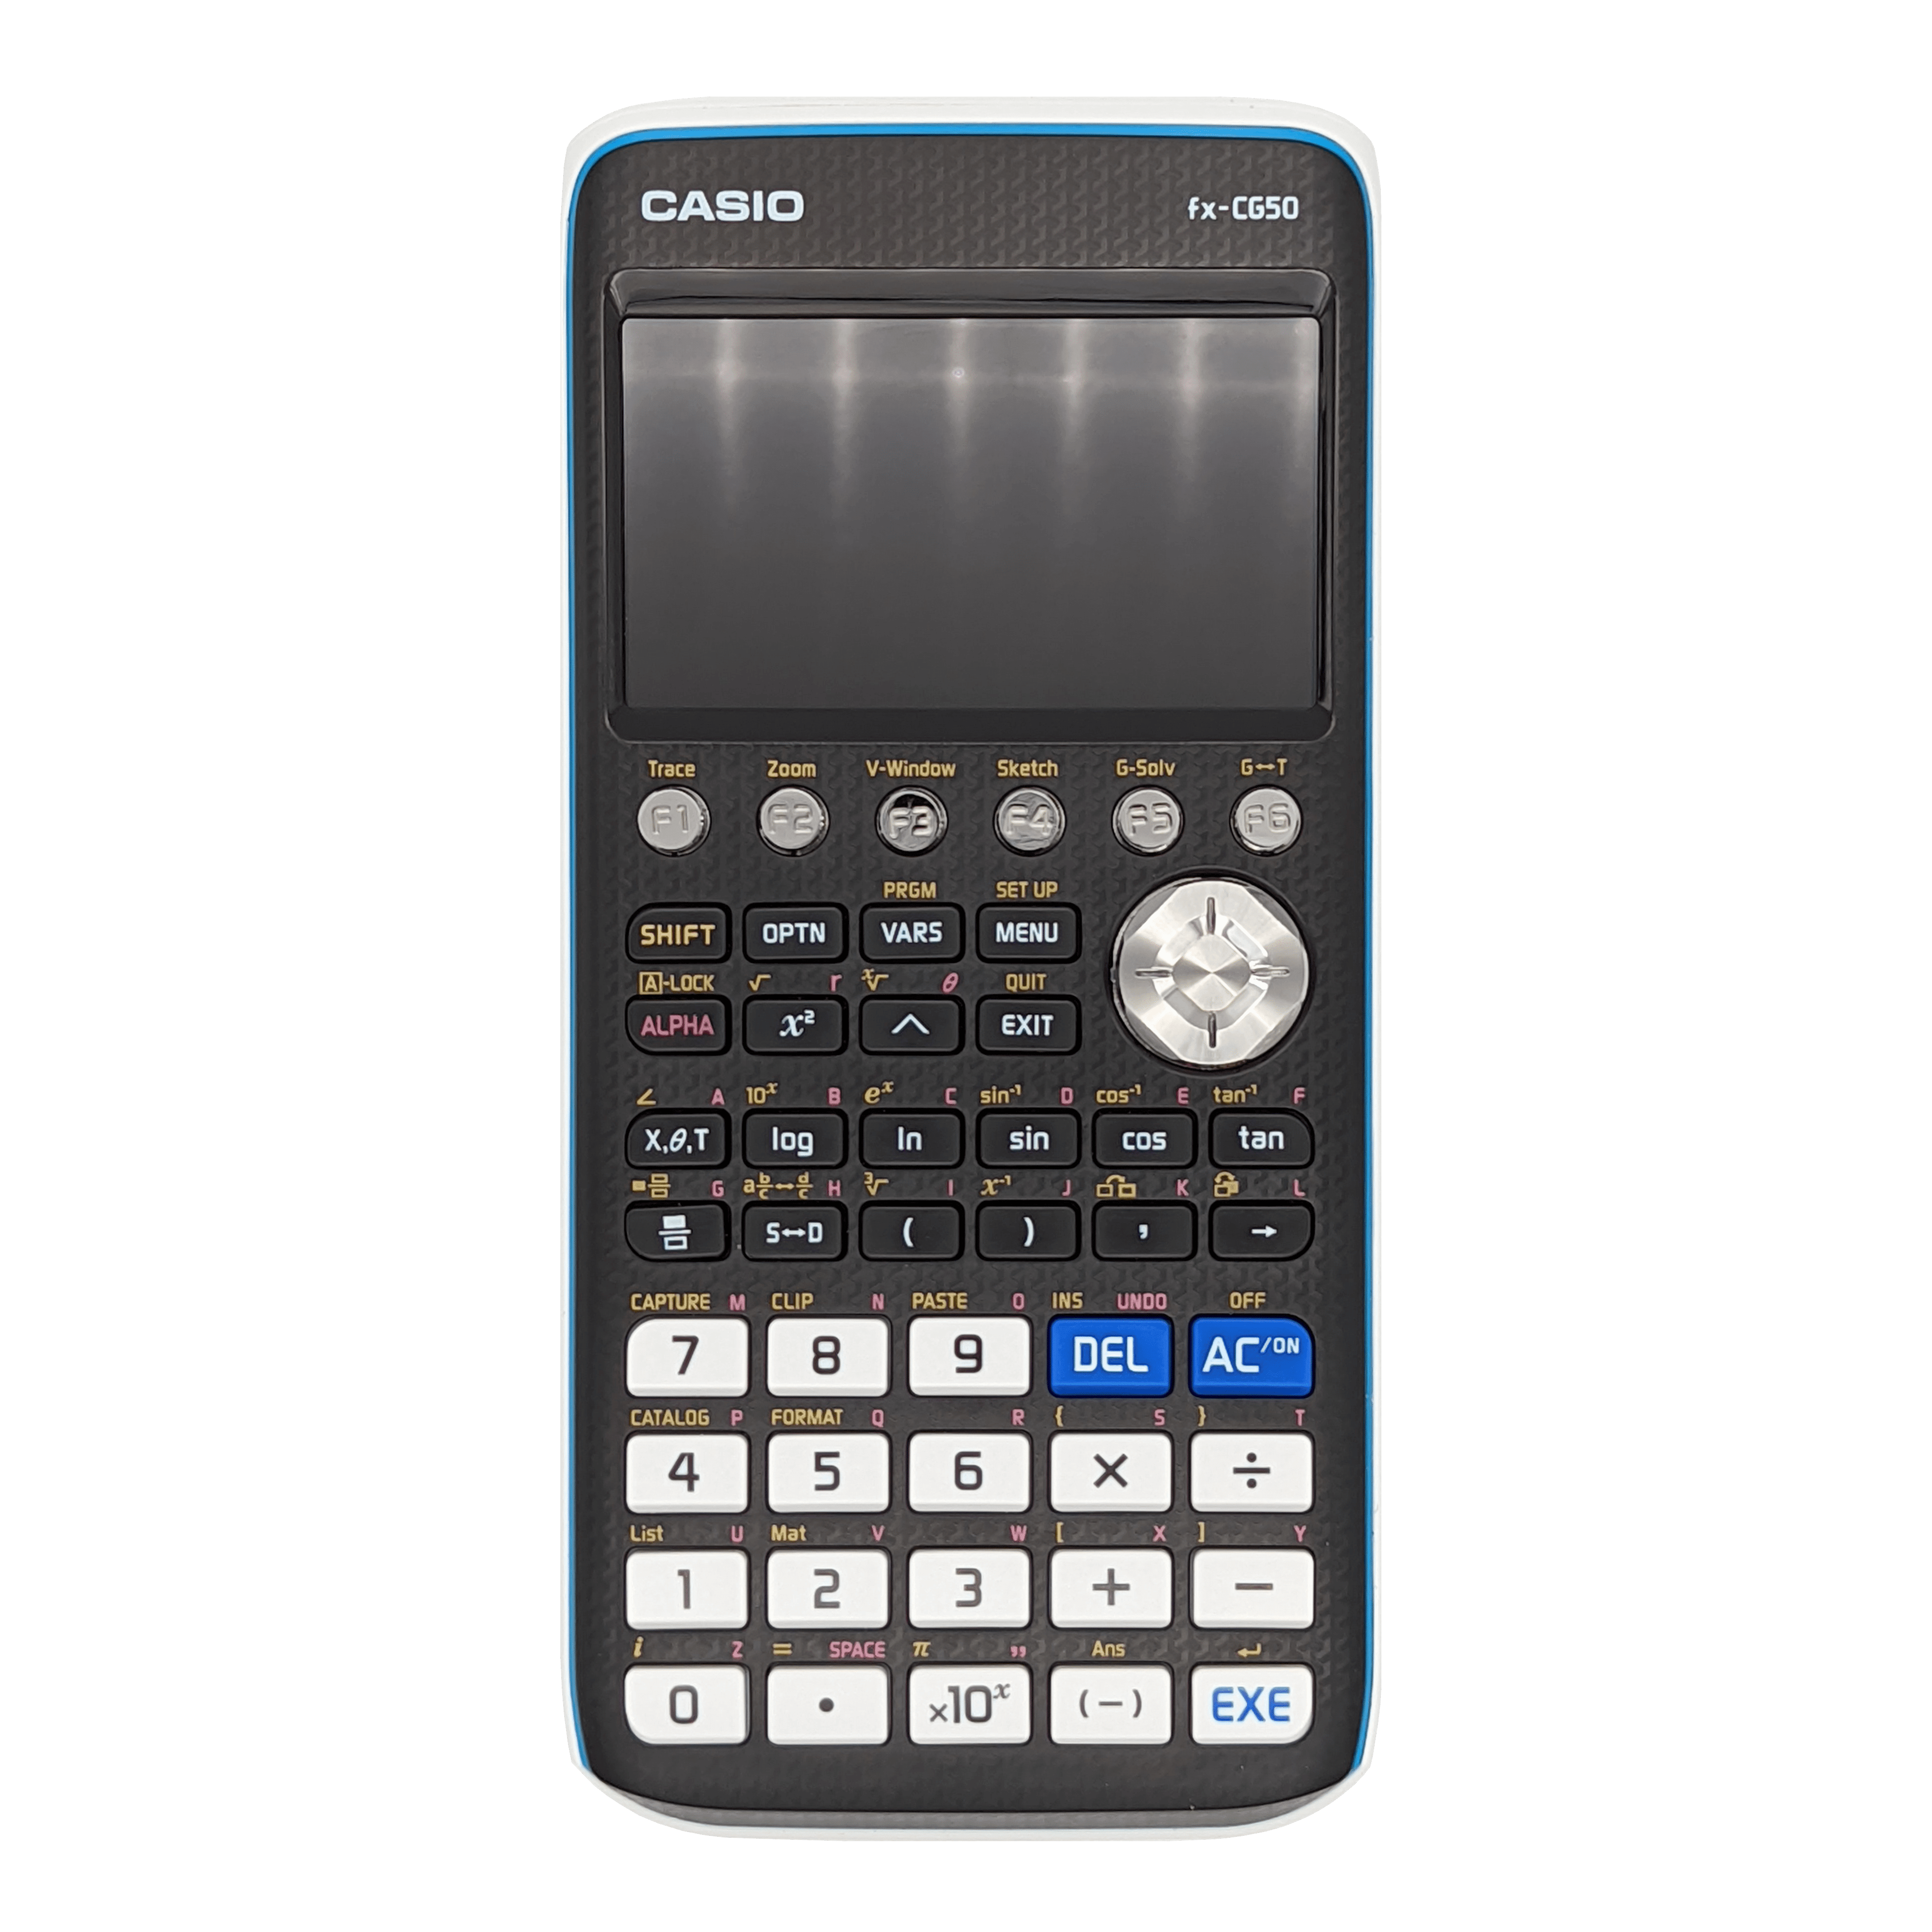 Casio PRIZM fx-CG50 Calculator - Underwood Distributing Co.